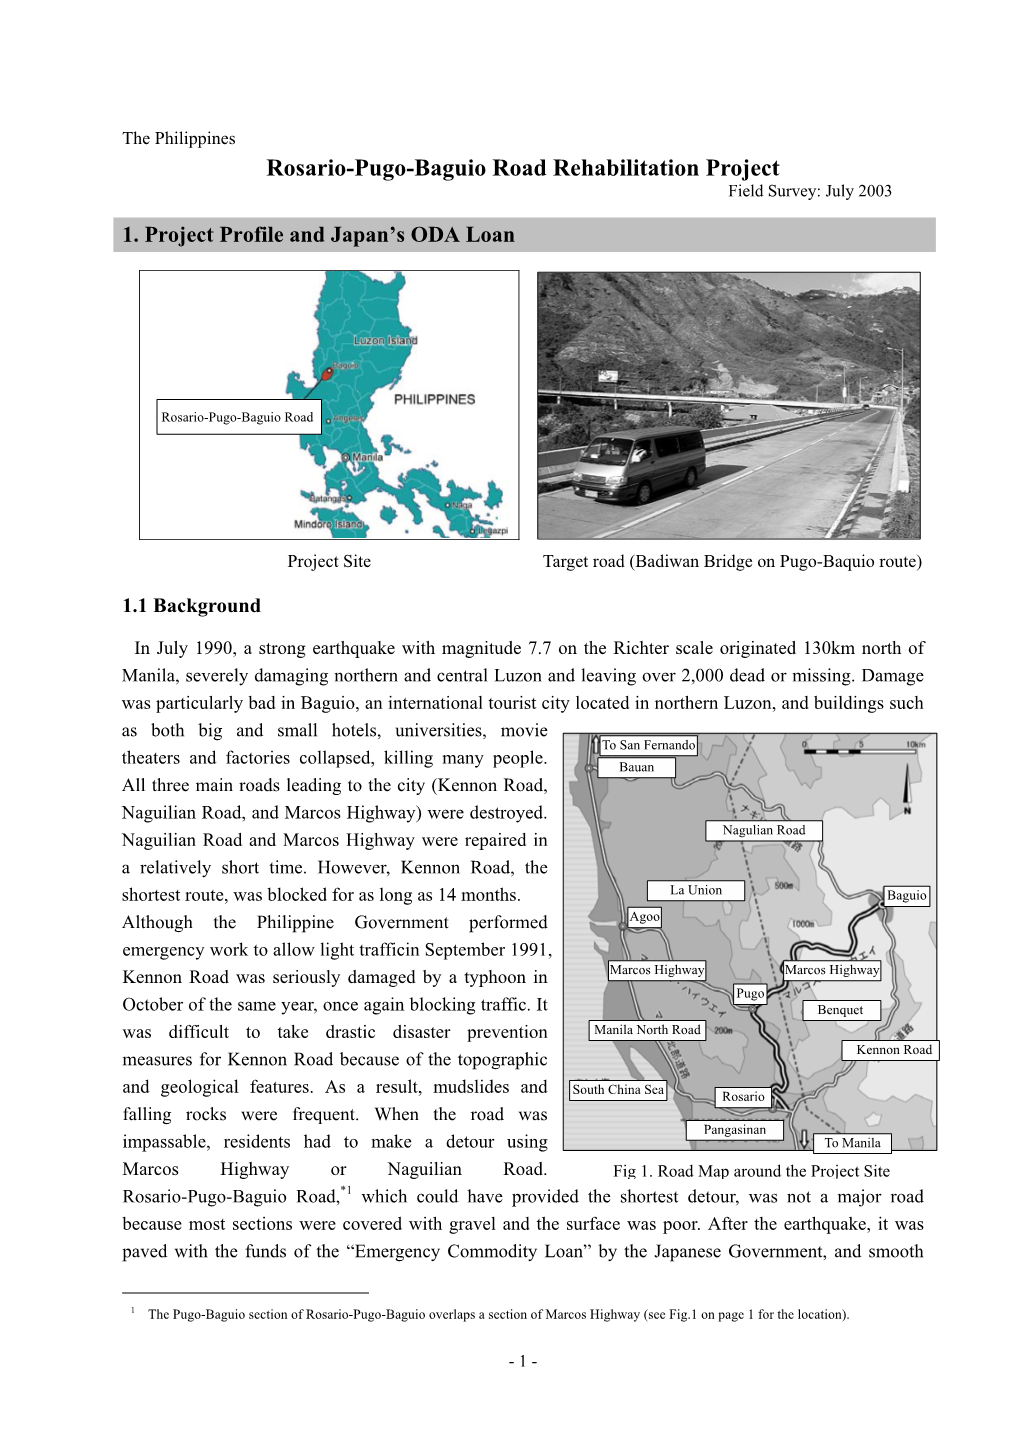 Rosario-Pugo-Baguio Road Rehabilitation Project Field Survey: July 2003